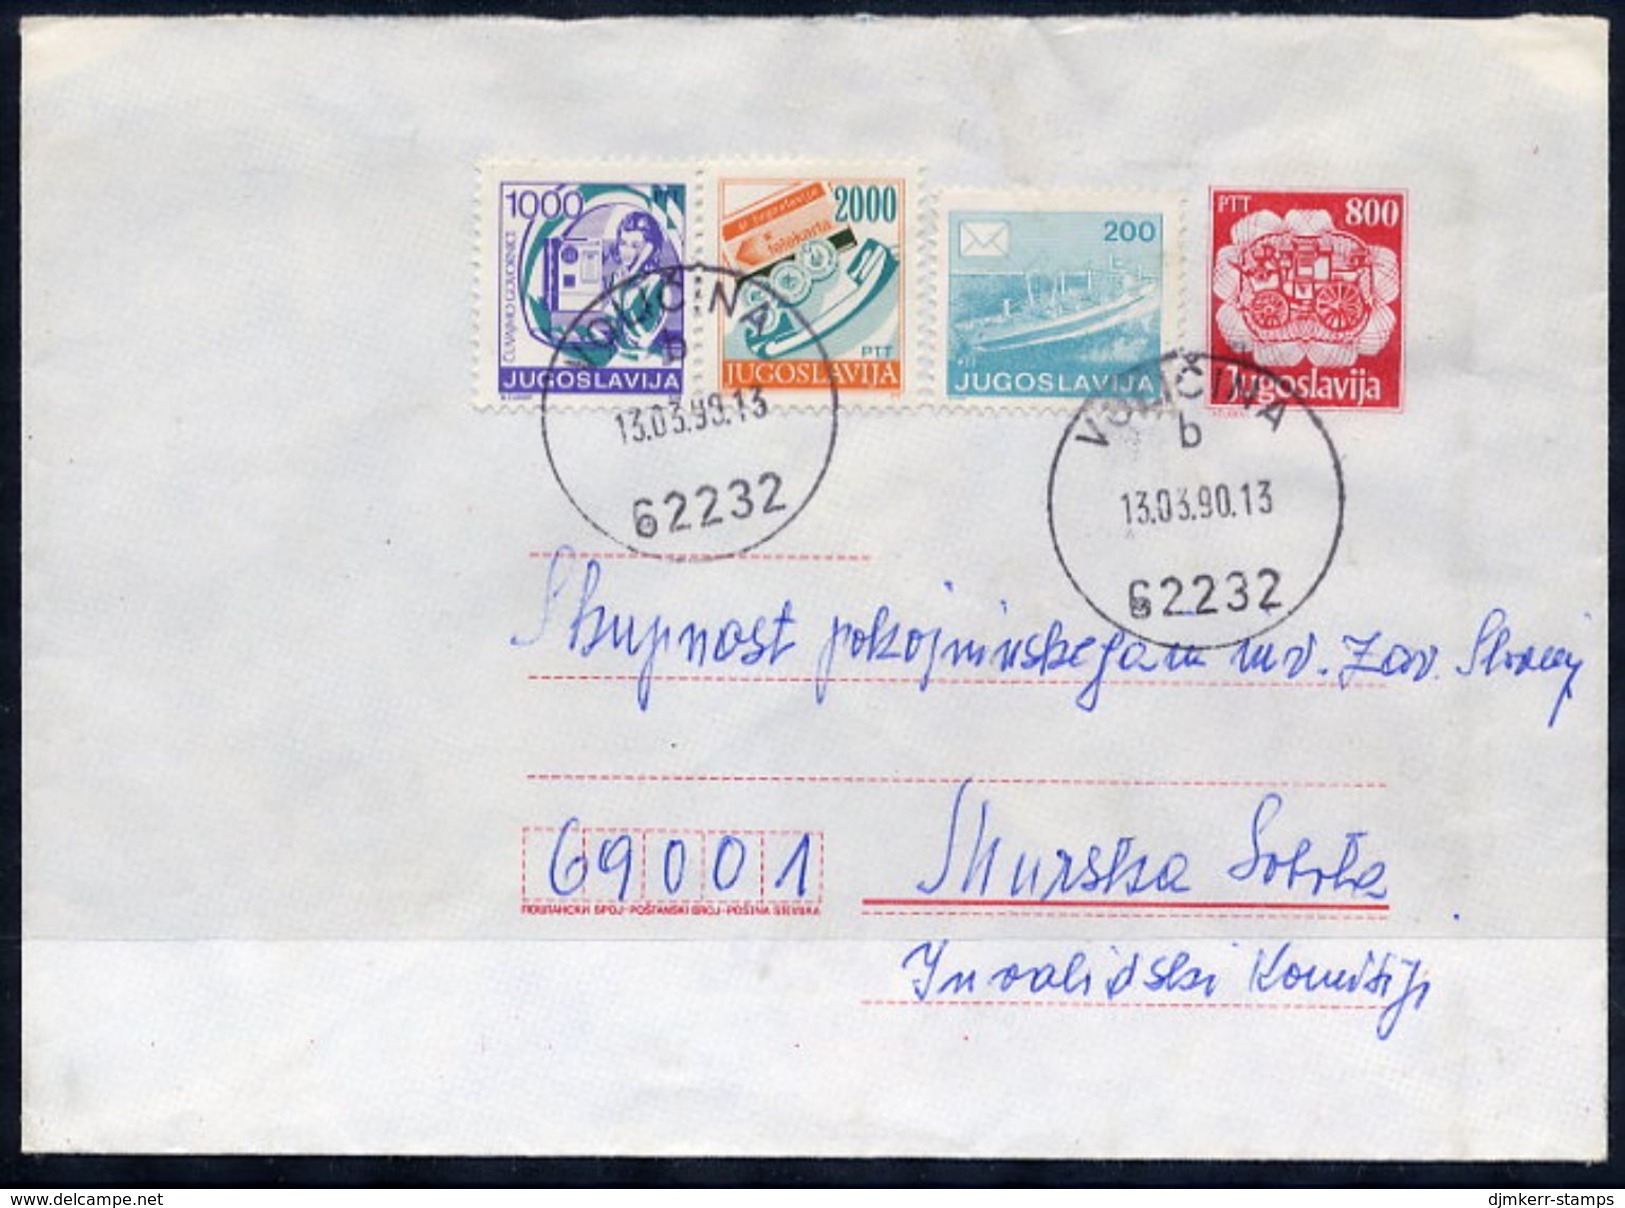 YUGOSLAVIA 1989 Mailcoach 800 D. Envelope Used With Additional Franking.  Michel U91 - Postal Stationery